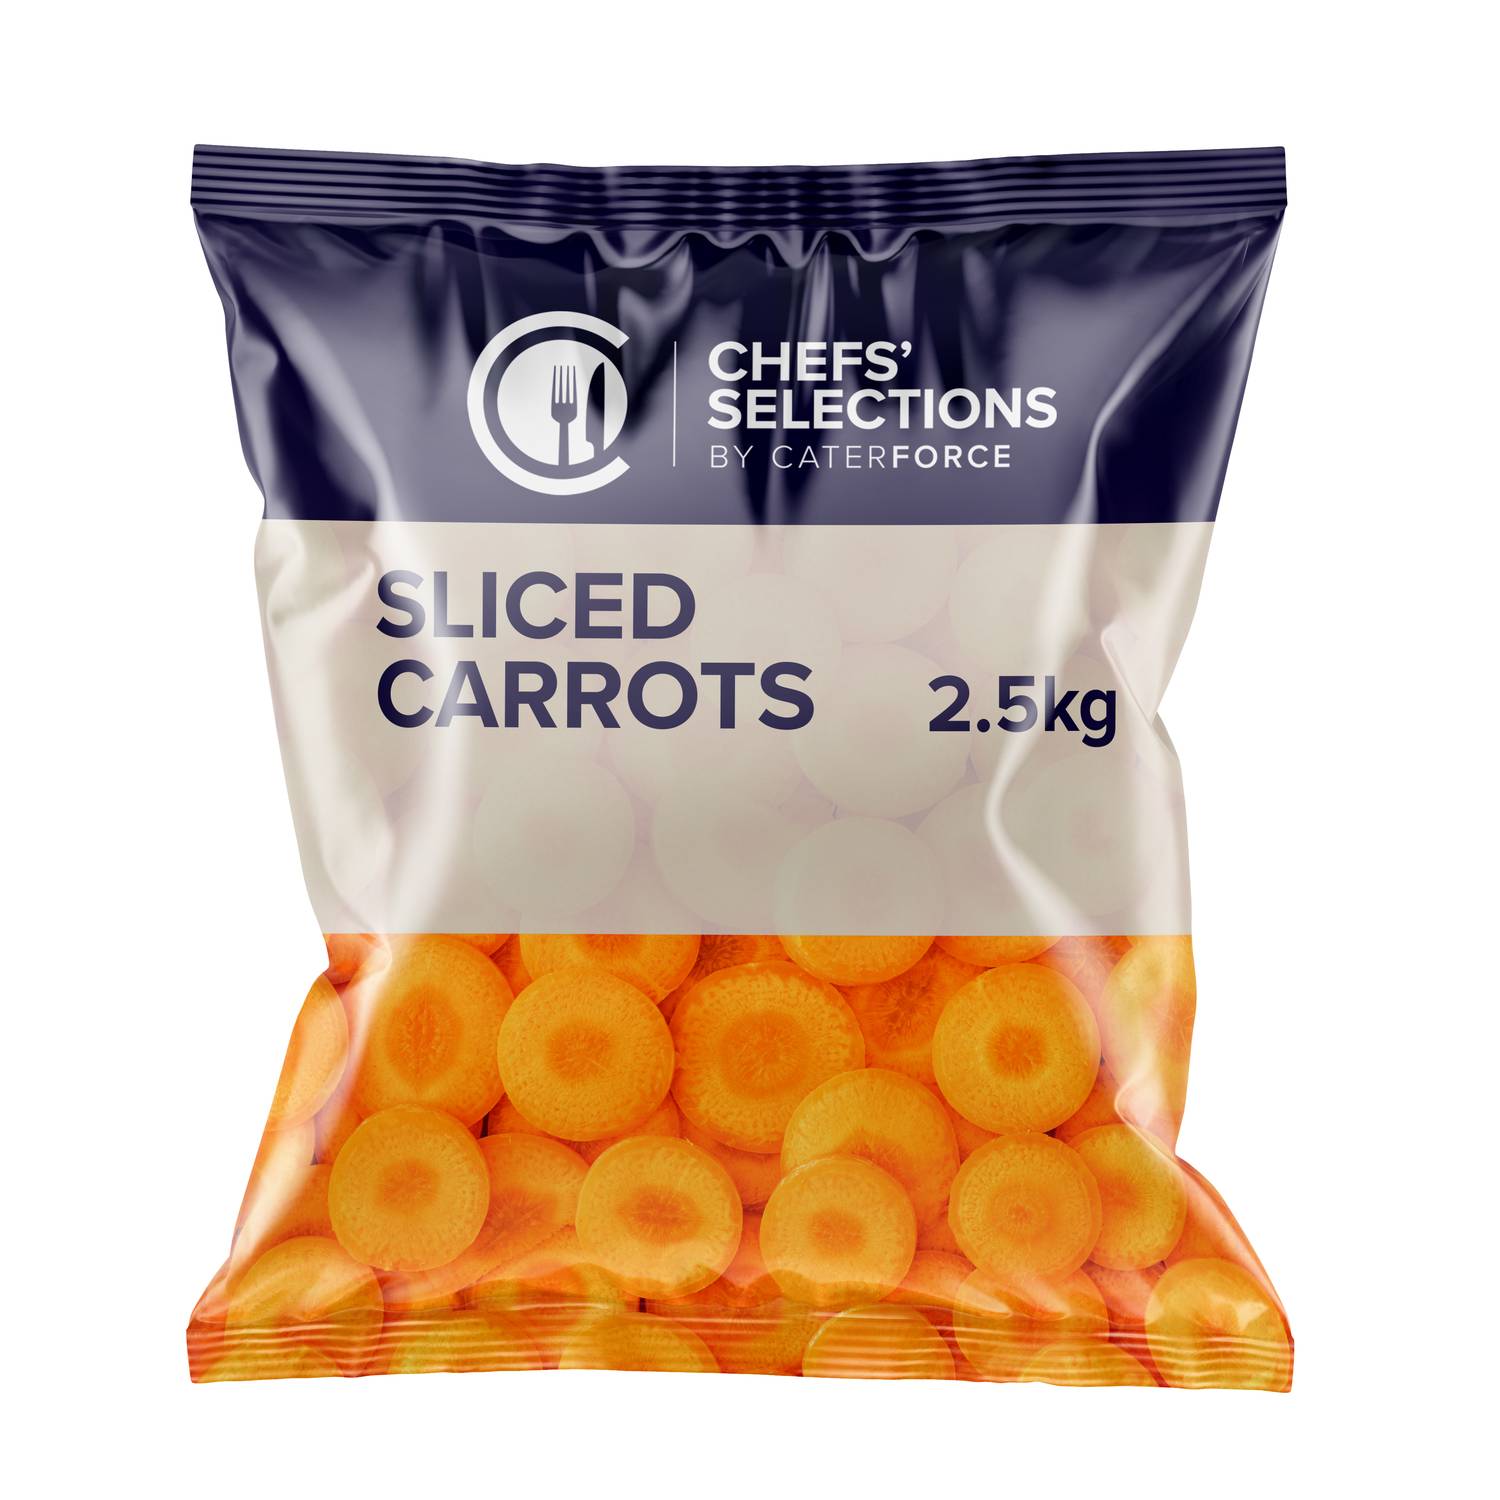 Chefs’ Selections Frozen Sliced Carrots (4 x 2.5kg)